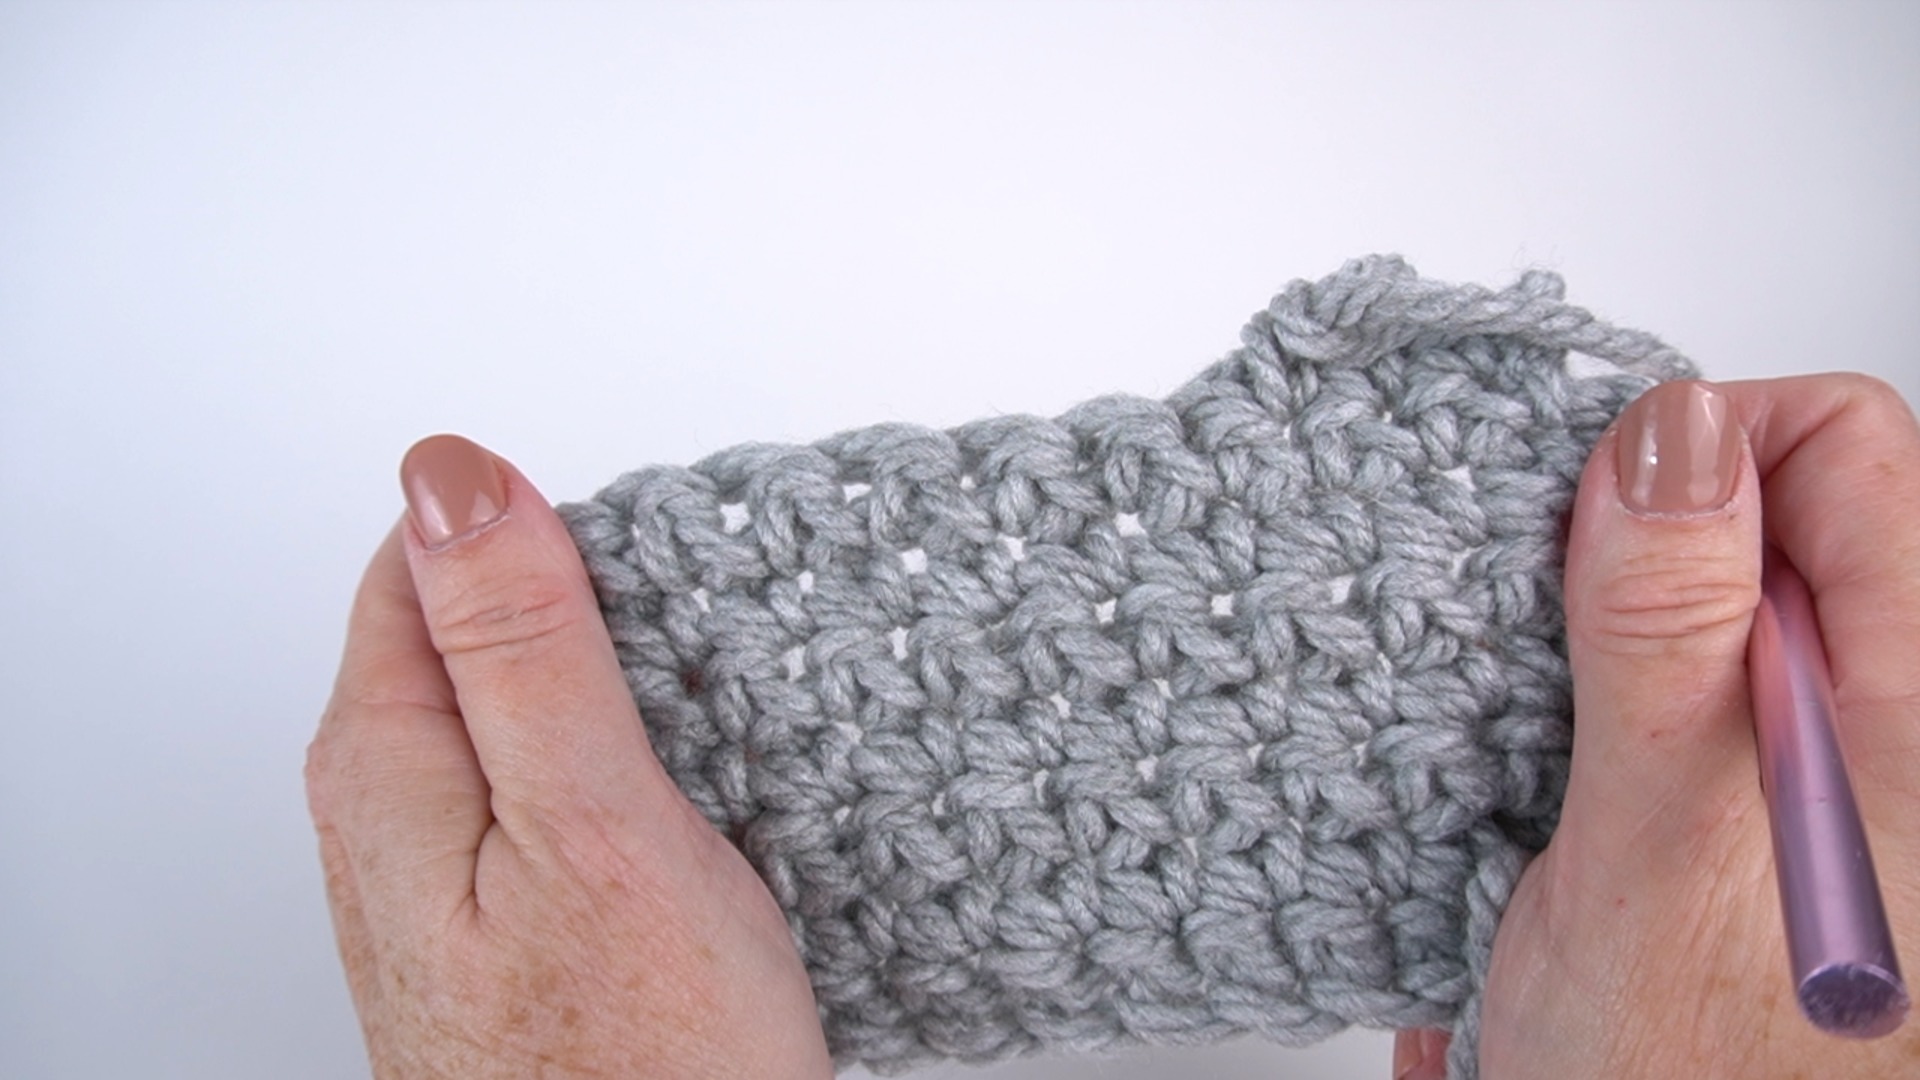 Yarn Under Single Crochet